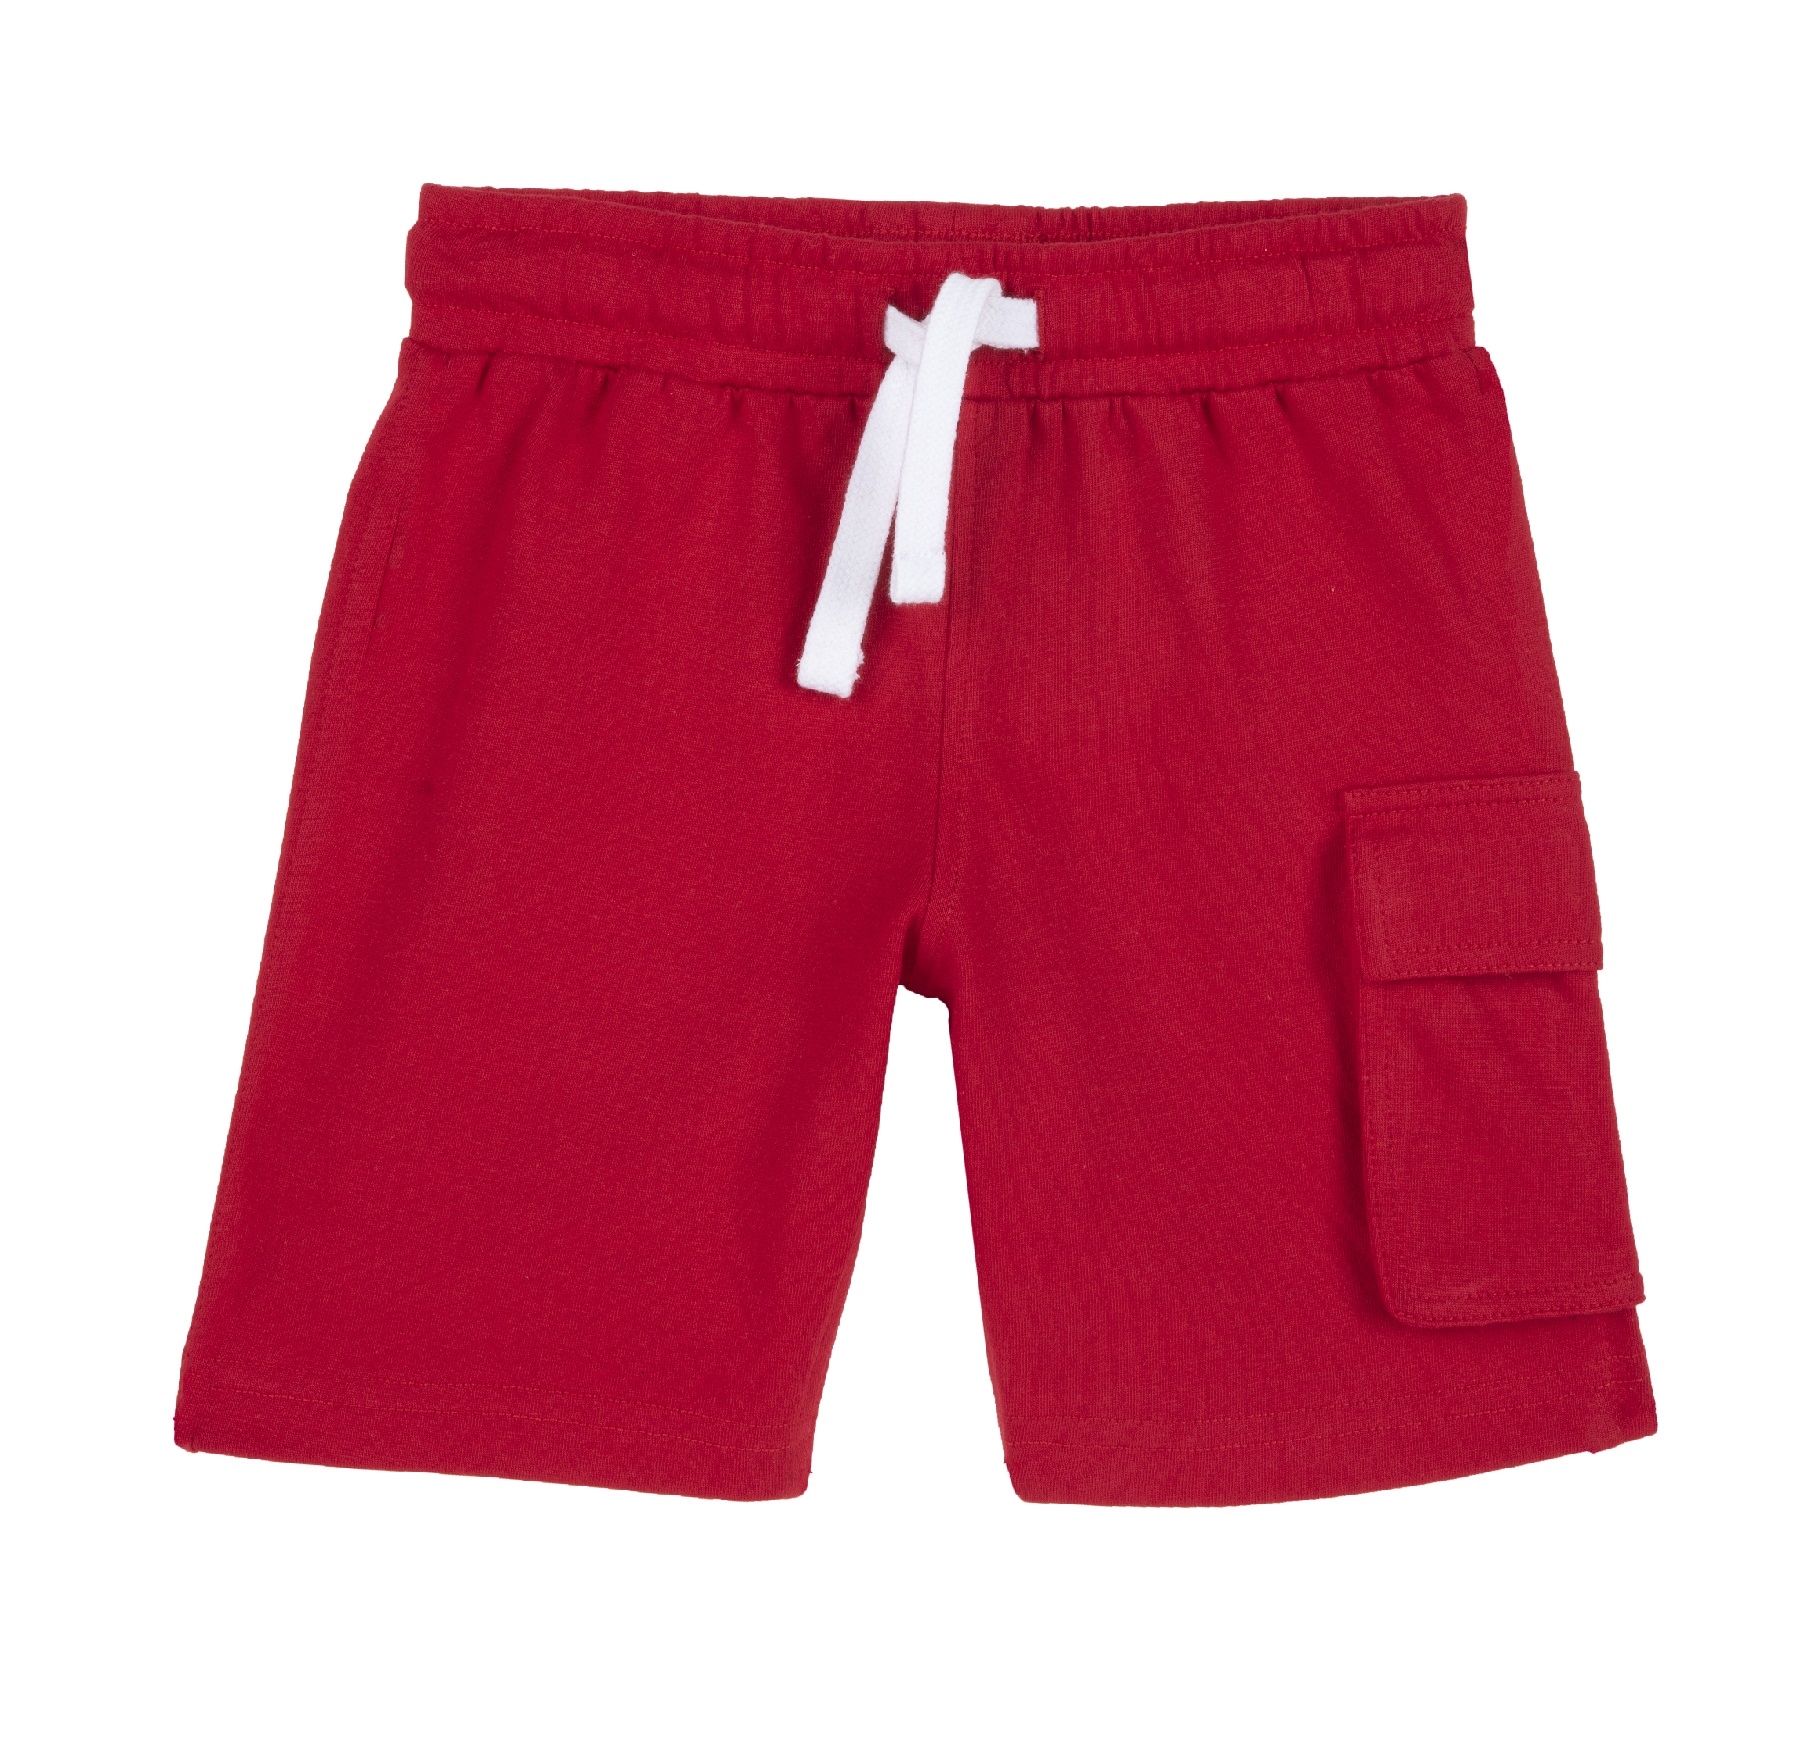 Pantaloni scurti copii Chicco, rosu, 00453 00453